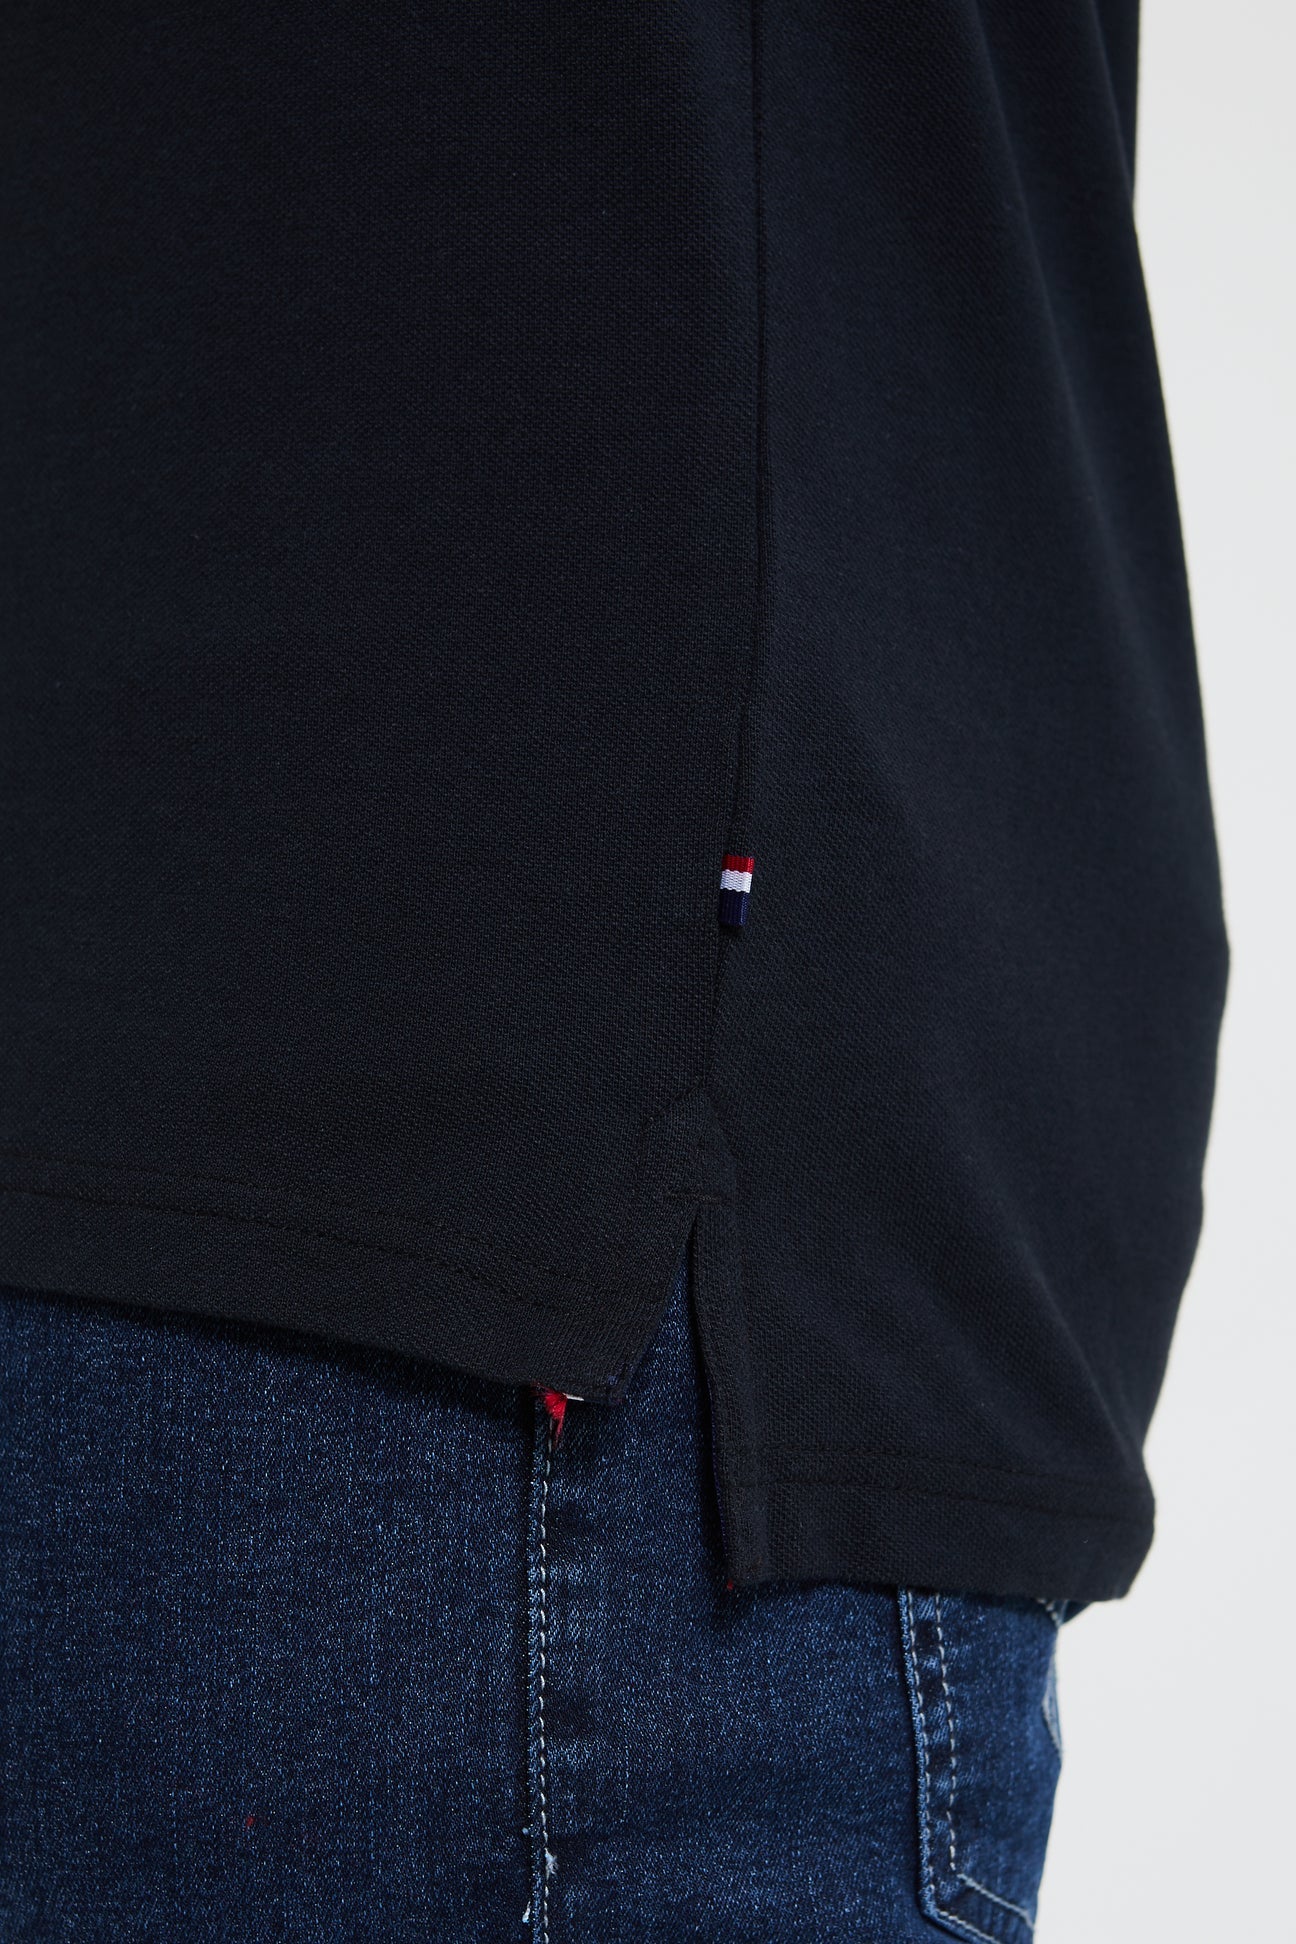 U.S Polo Assn short sleeve polo shirt in black